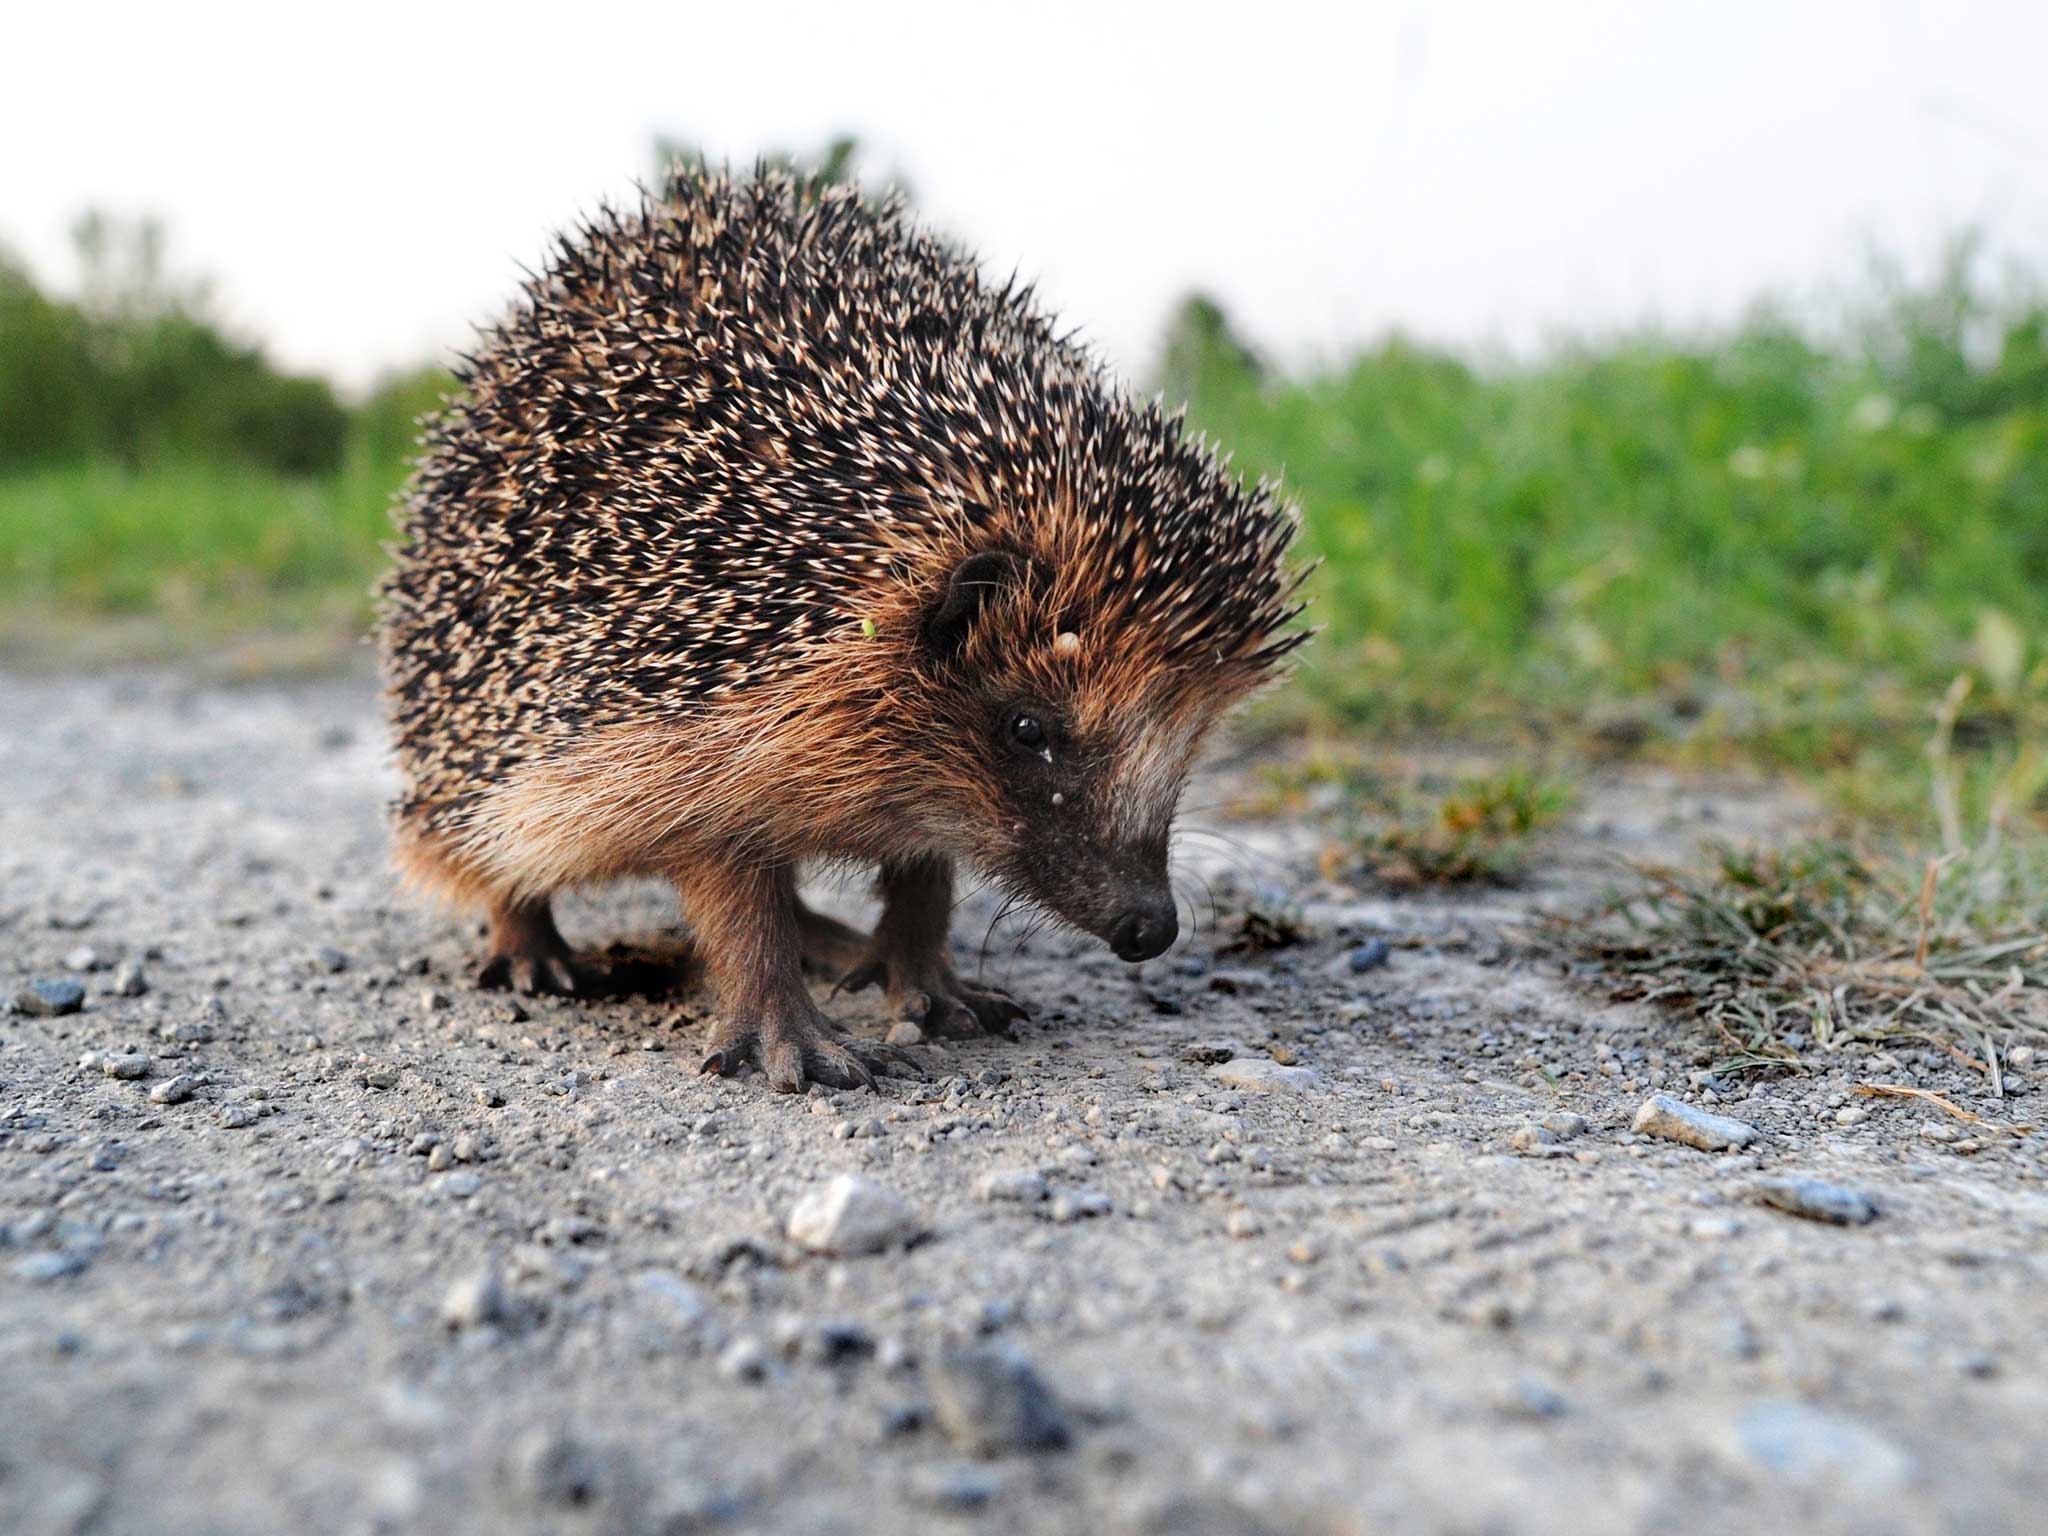 Hedgehog are under threat from decreasing habitats